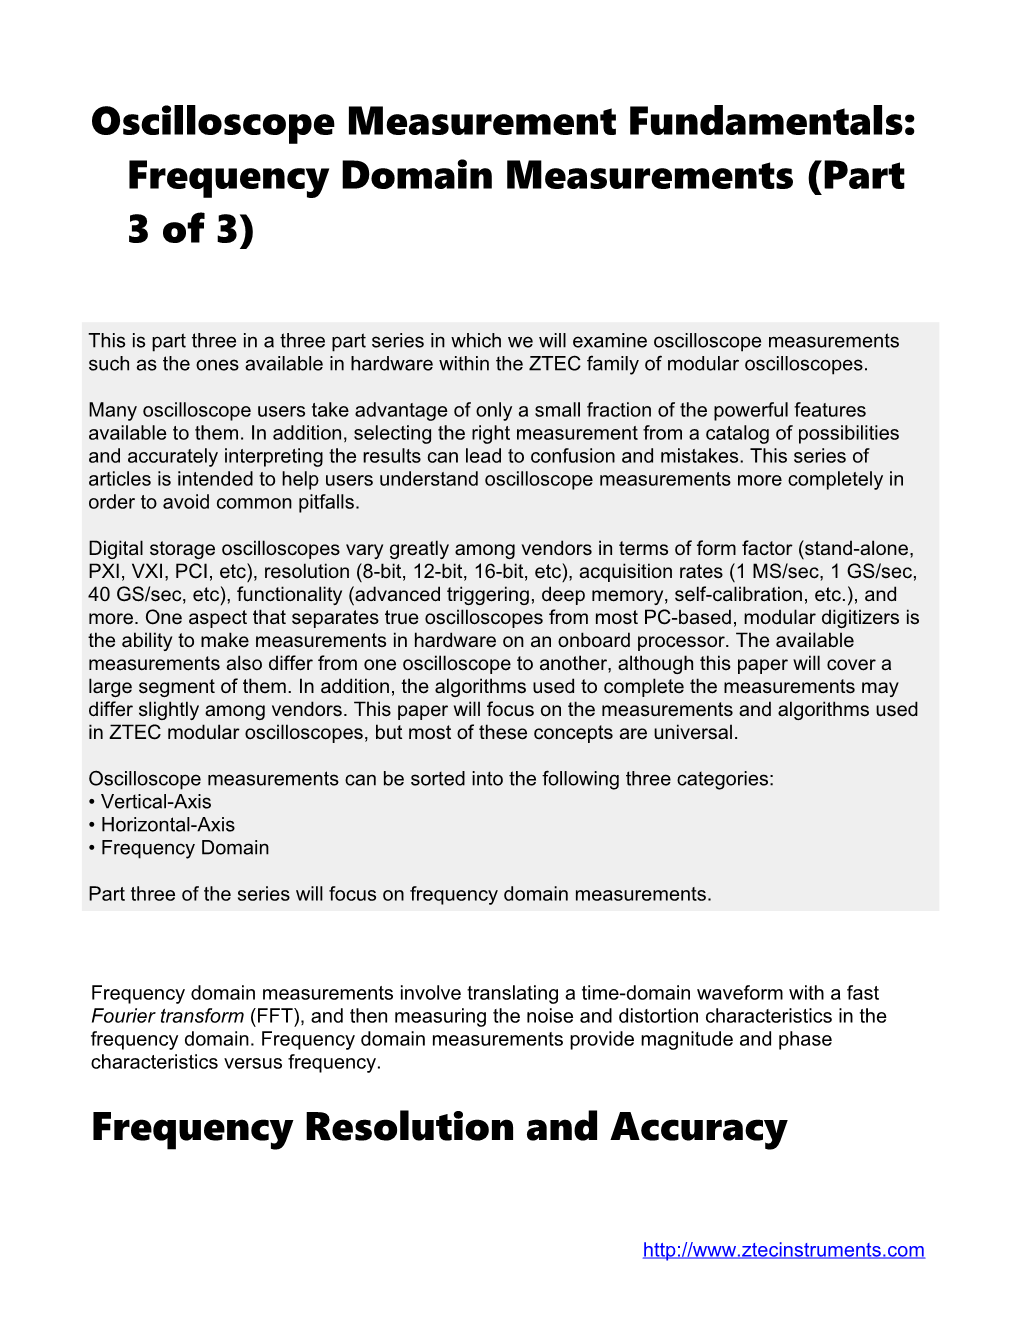 Oscilloscope Measurement Fundamentals: Frequency Domain Measurements (Part 3 of 3)